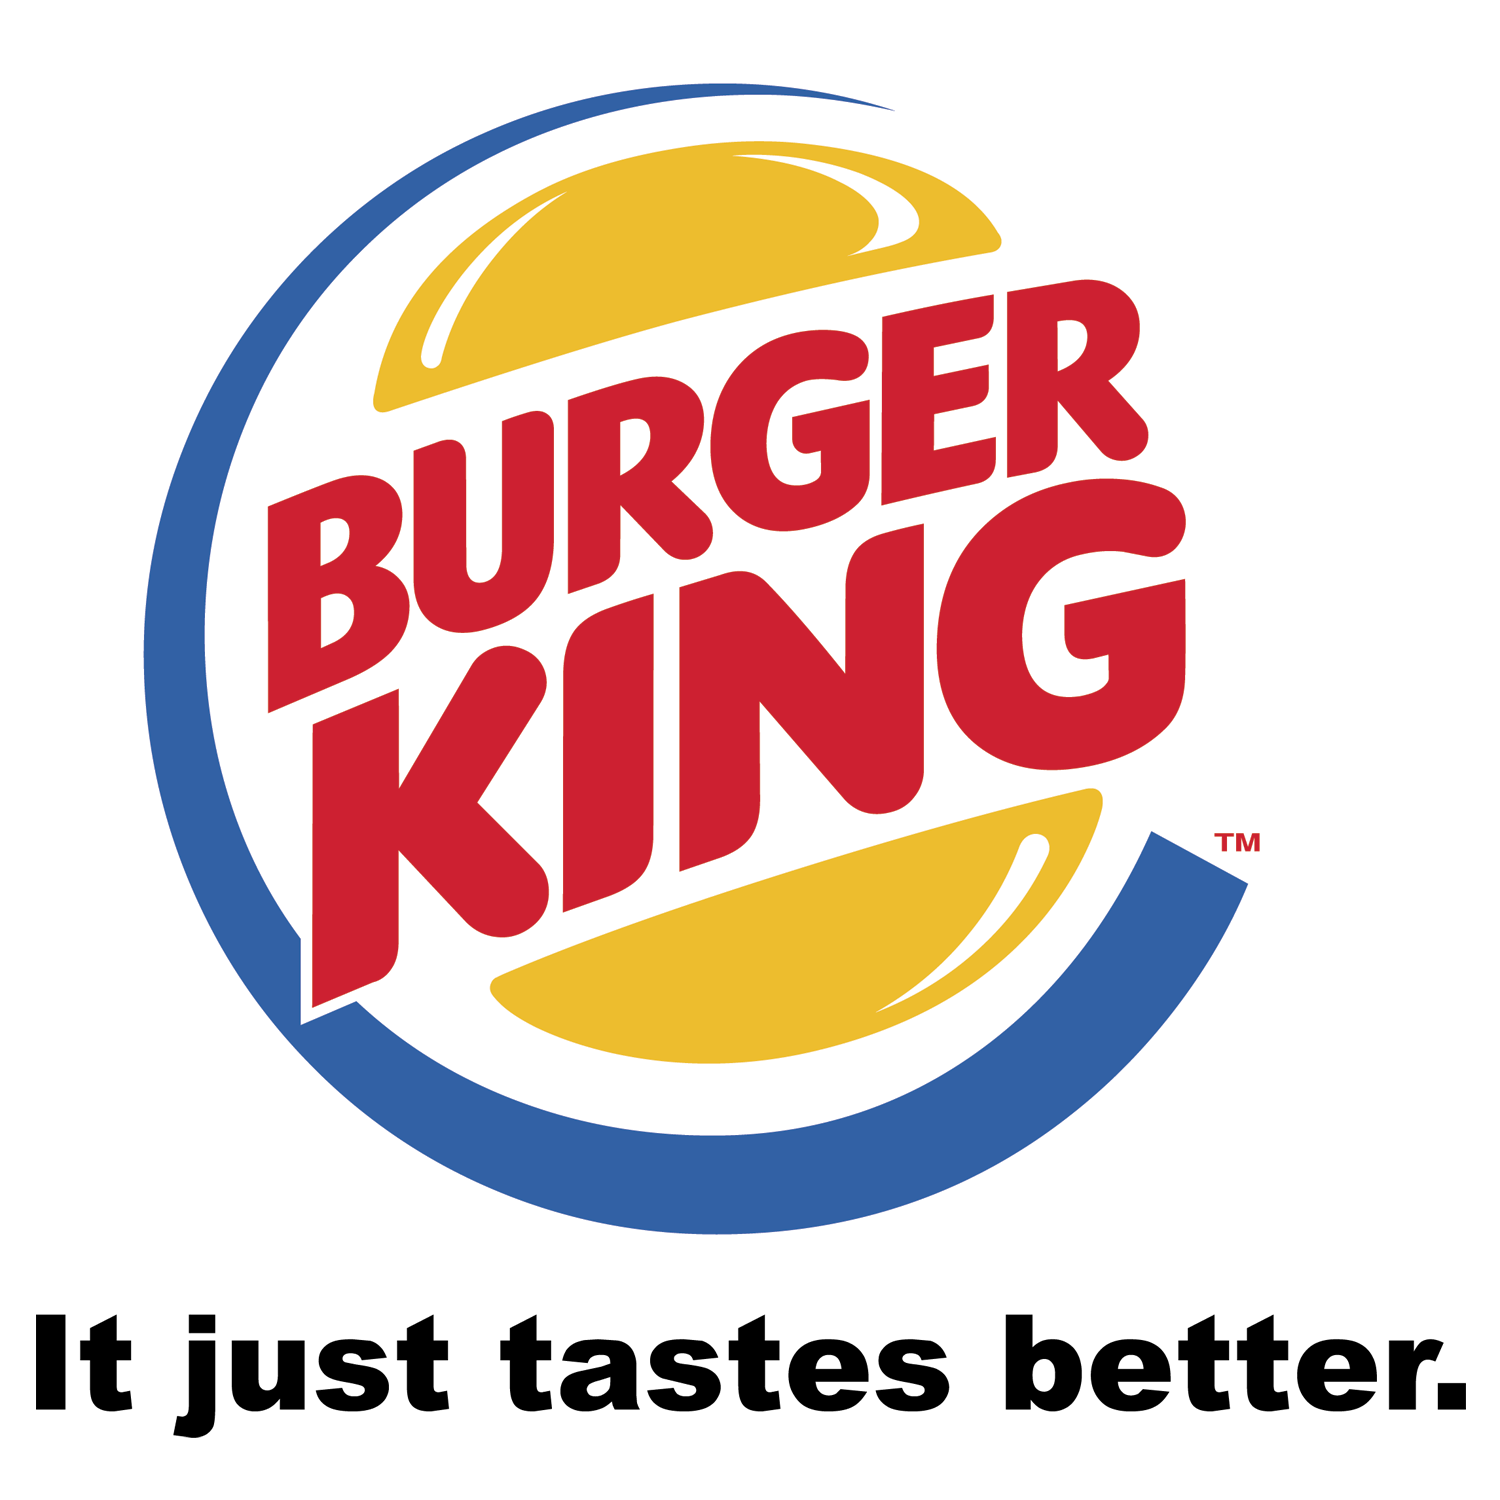 Any Logo - Burger King Logo PNG Transparent Burger King Logo.PNG Images. | PlusPNG